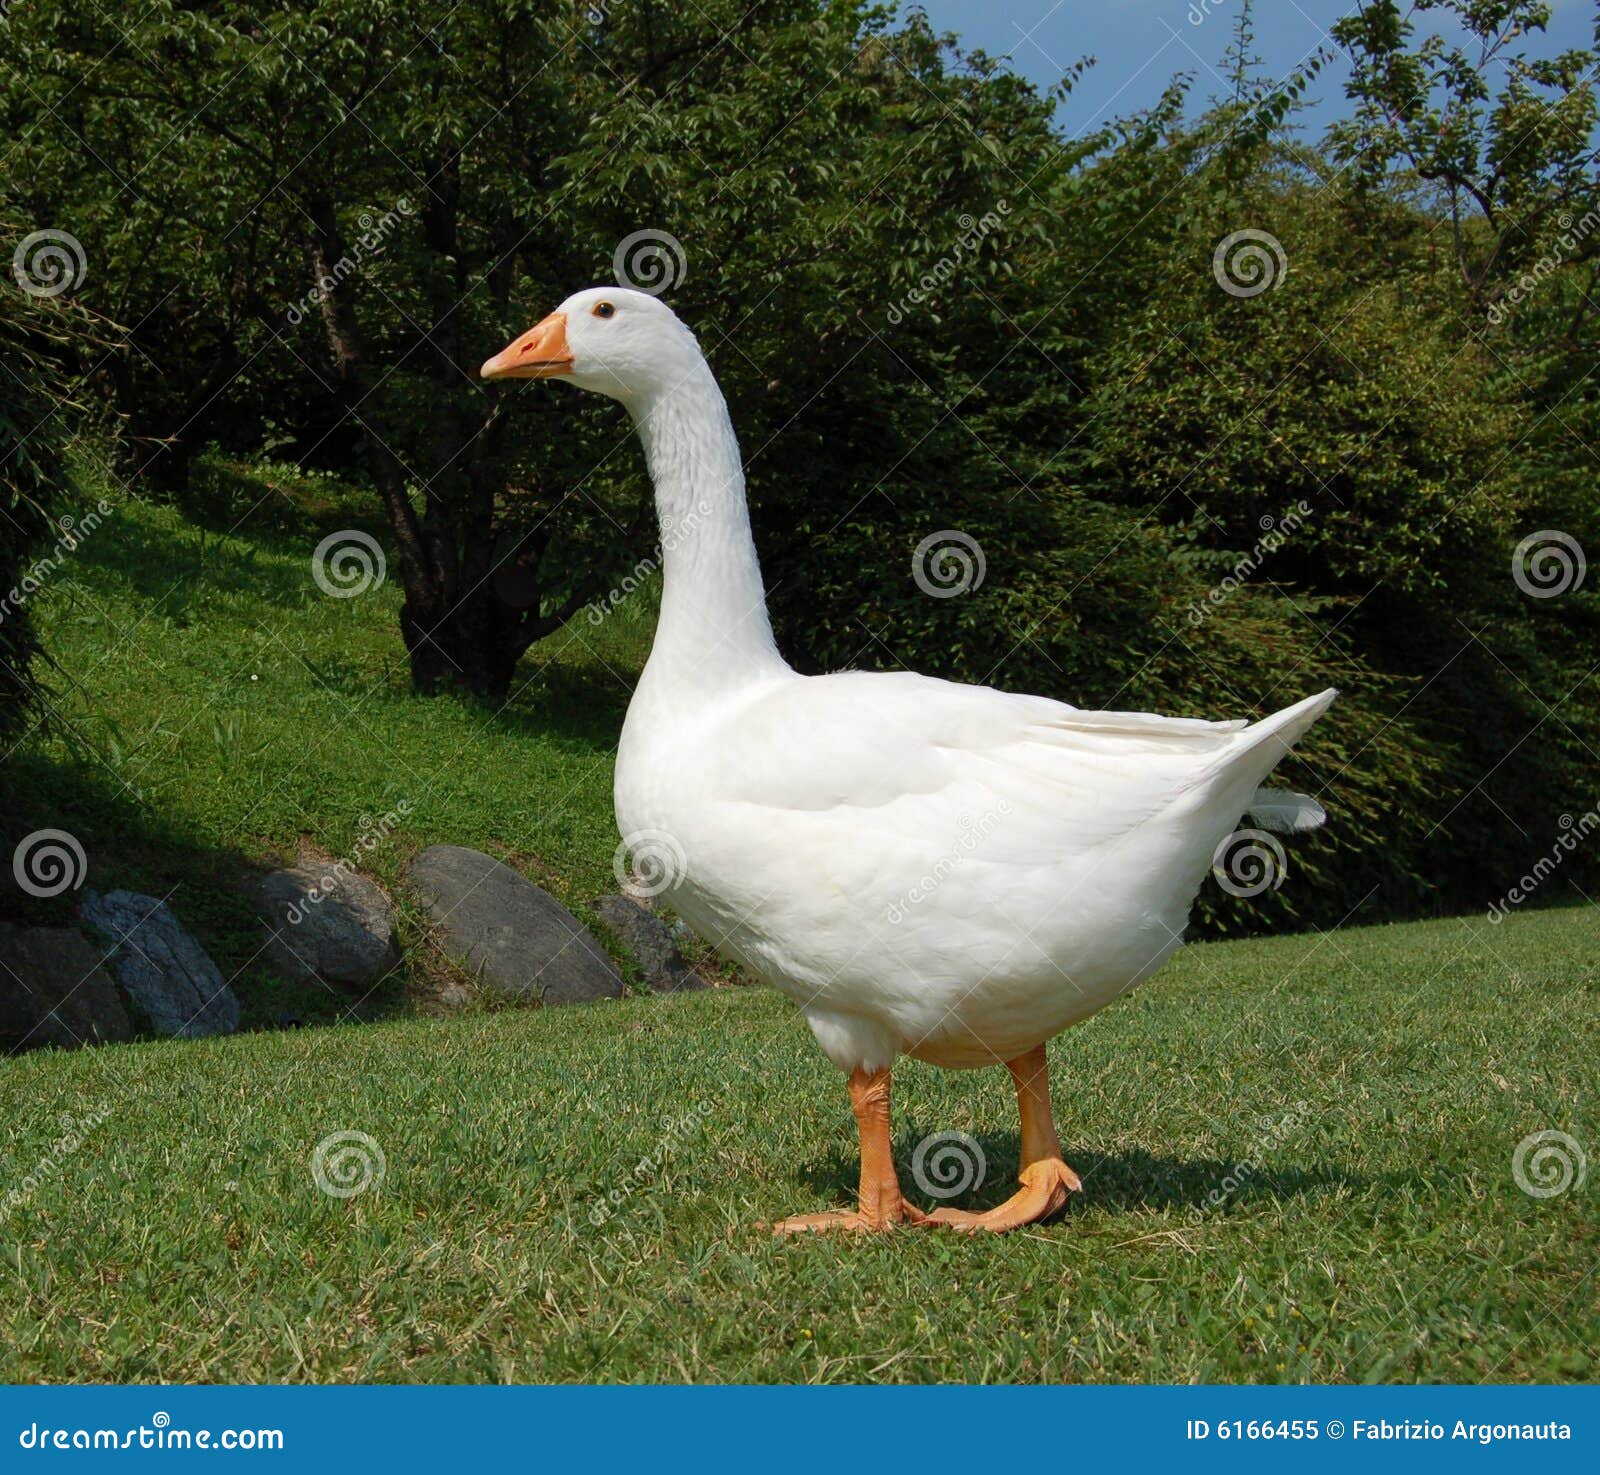 white goose in garden